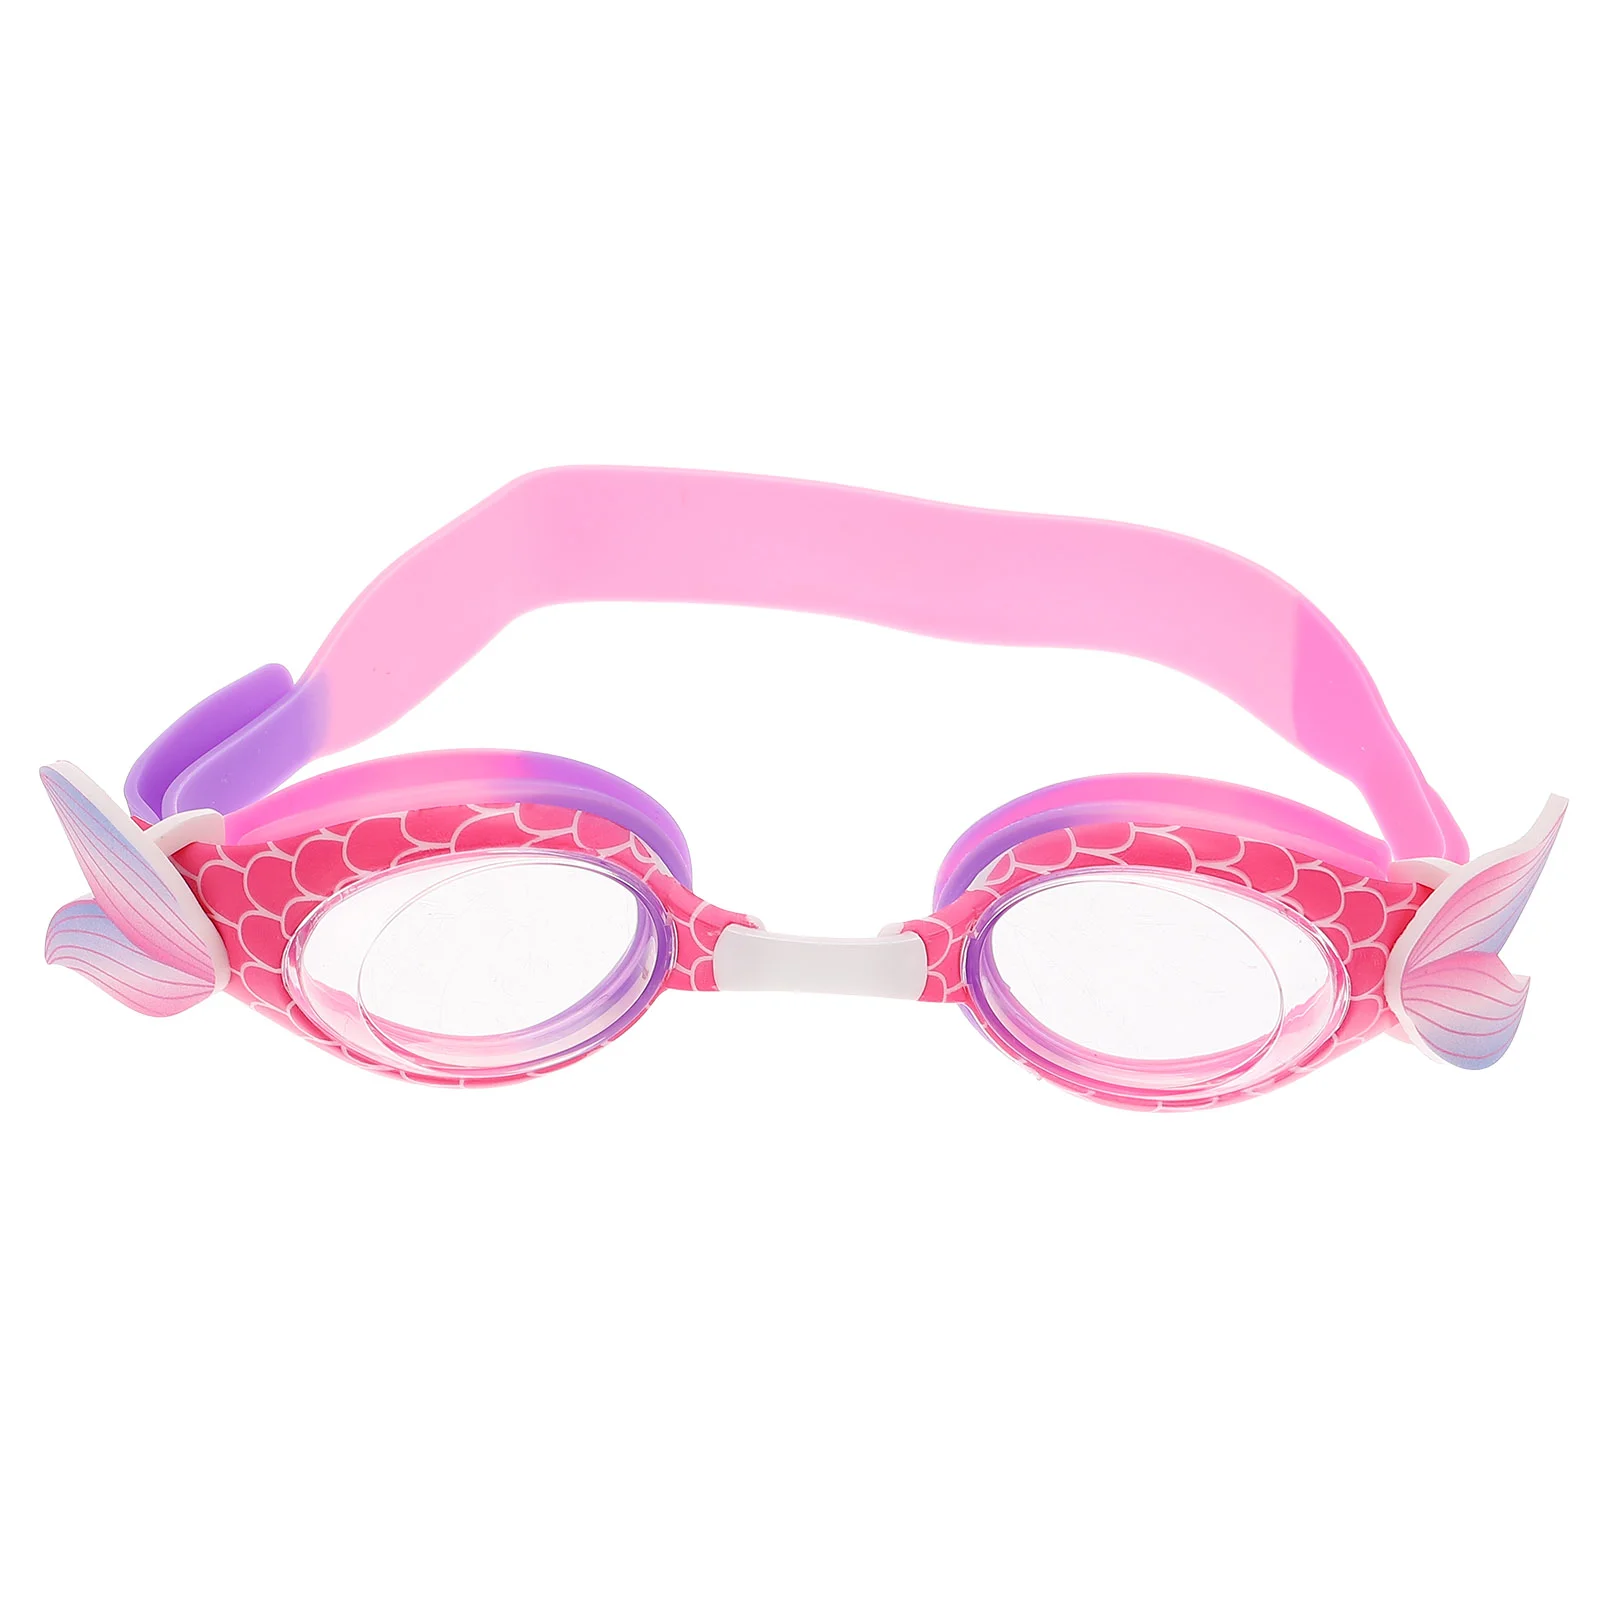 Children's Swimming Goggles Glasses Kids Mermaid Eyelash Toddler Silicone for Boy